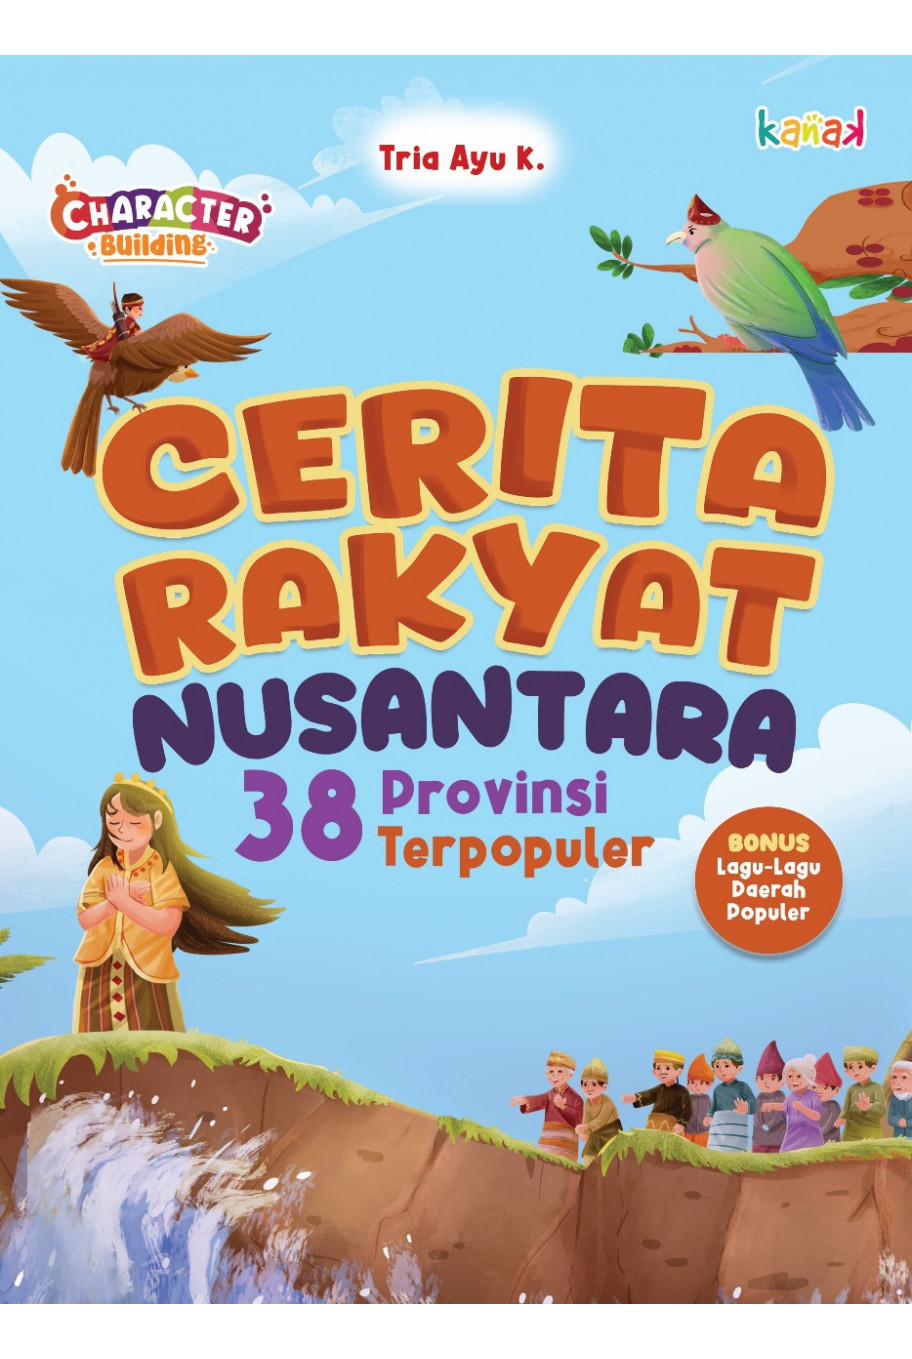 Cerita Rakyat Nusantara 38 Provinsi Terpopuler	